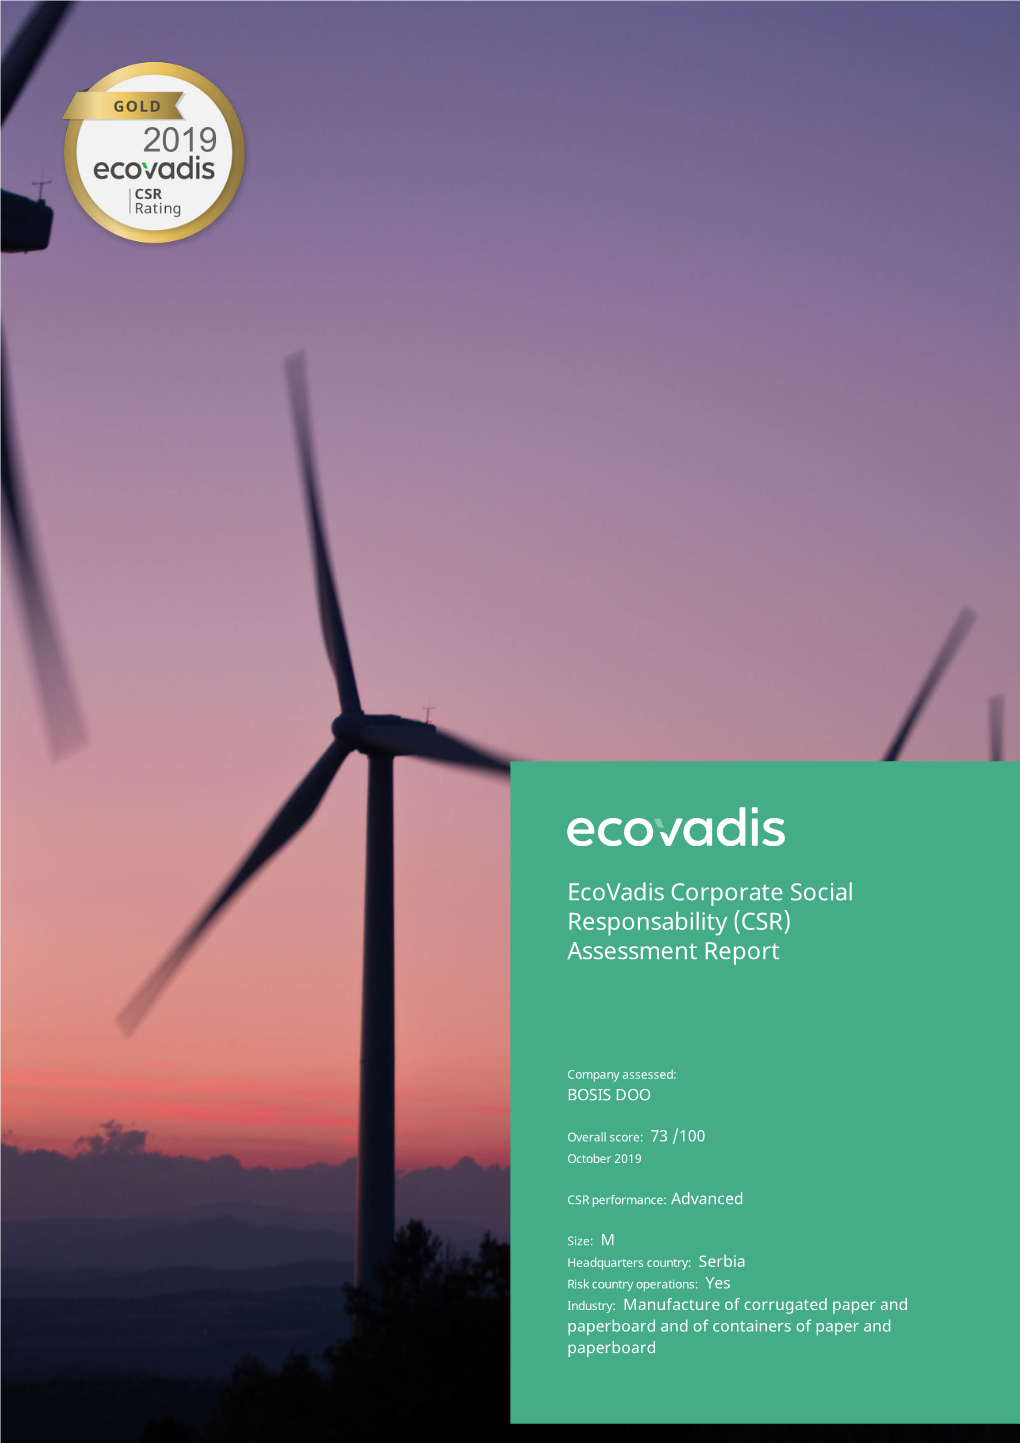 Ecovadis Corporate Social Responsability (CSR) Assessment Report